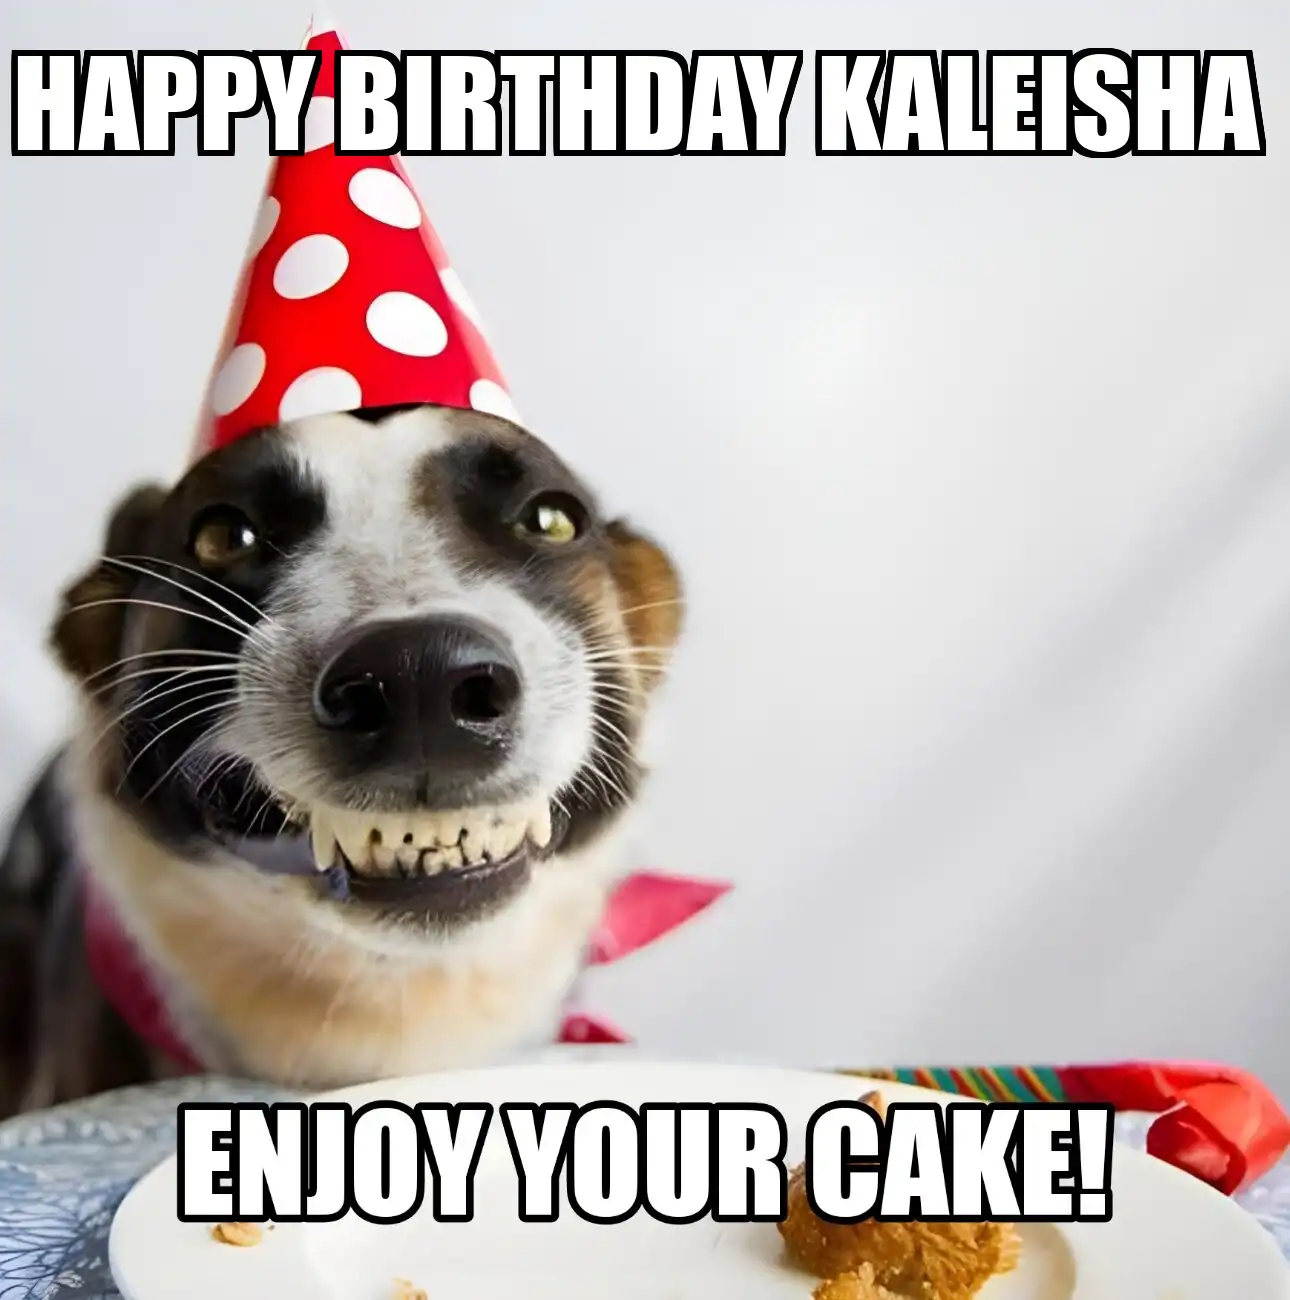 Happy Birthday Kaleisha Enjoy Your Cake Dog Meme